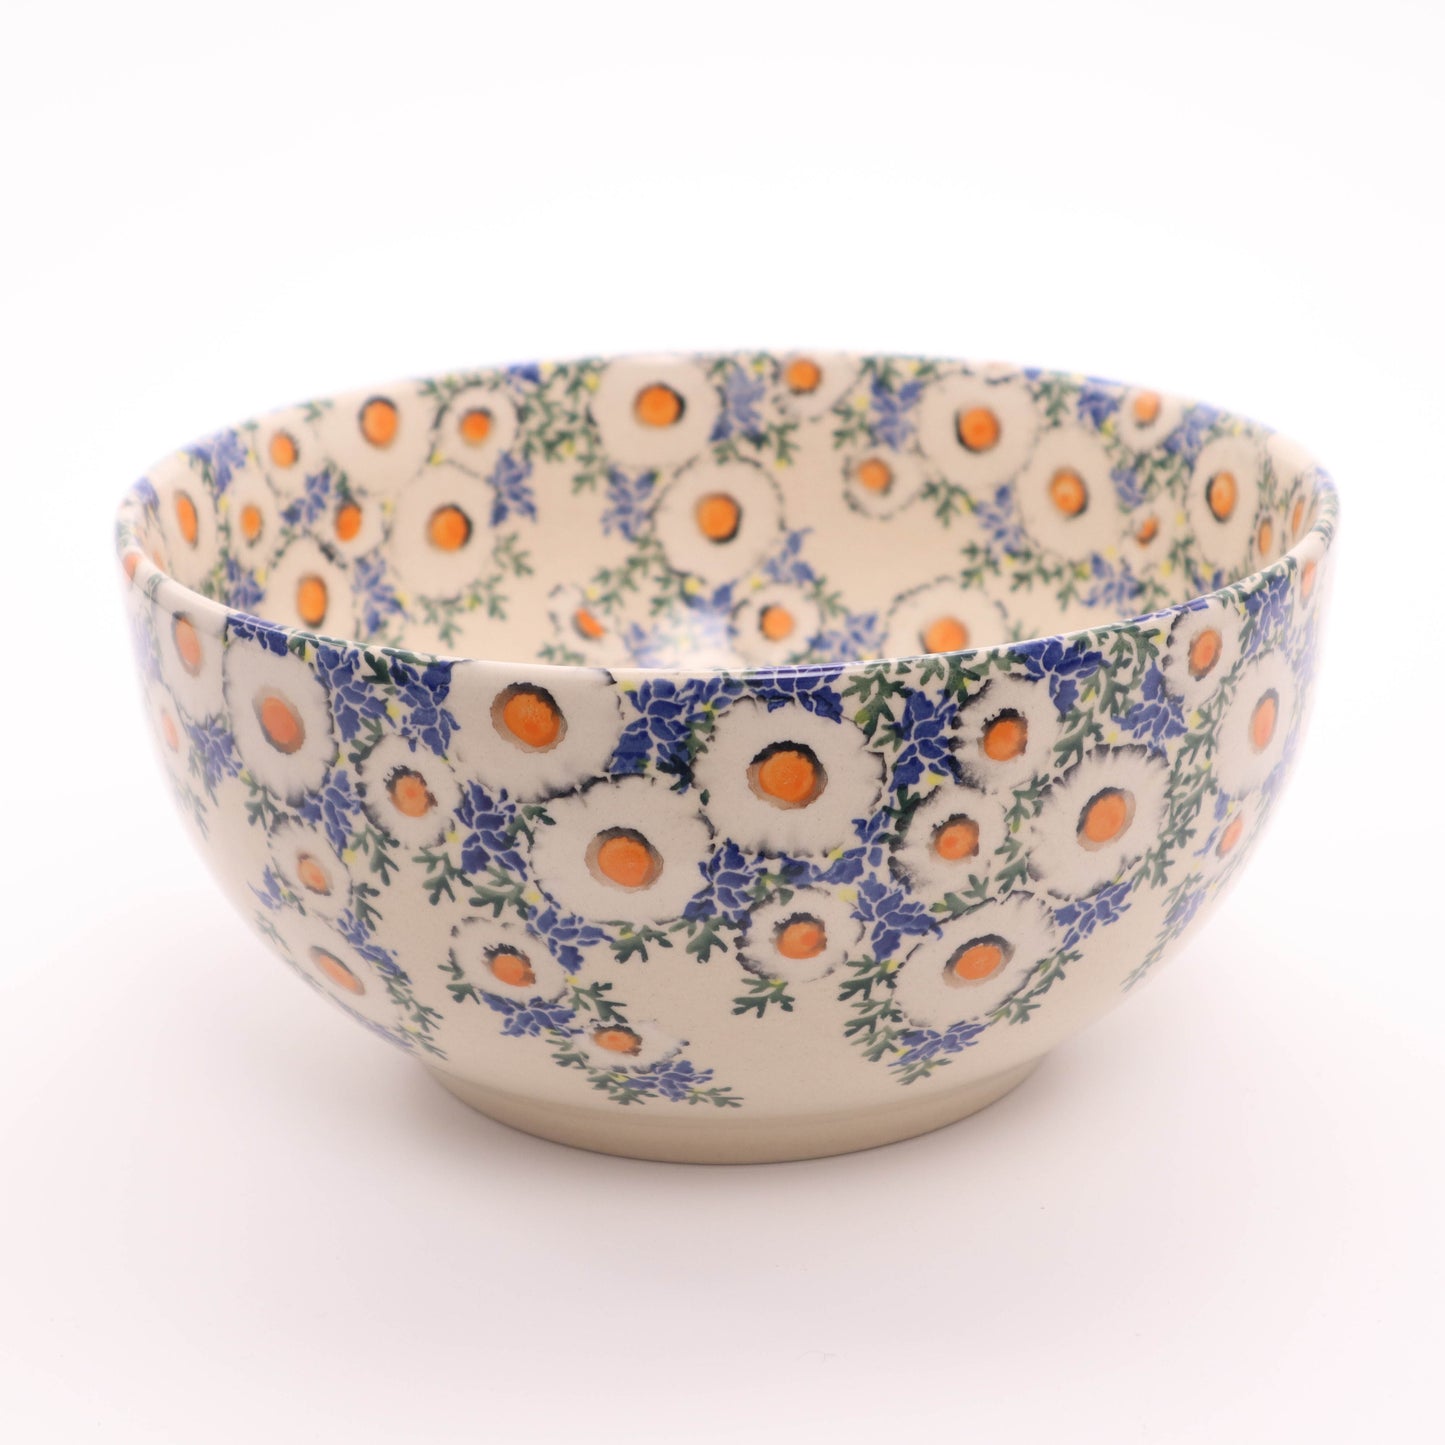 9"Serving bowl pattern:Daisy Delight